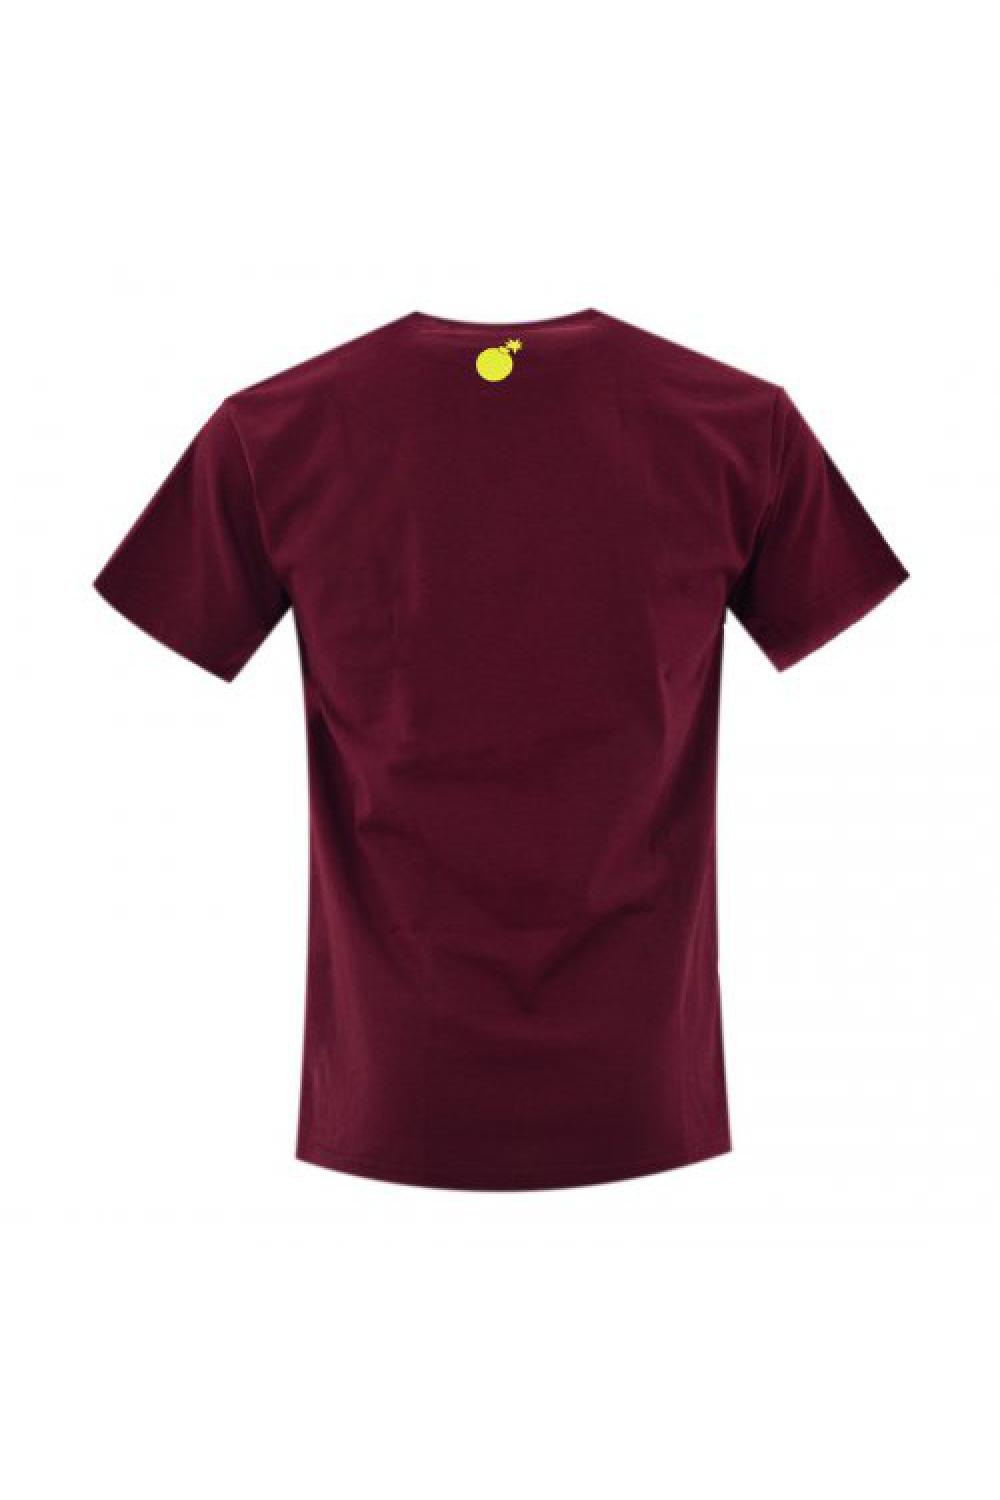 THE HUNDREDS T-shirt Toulouse Adam Men - Burgundy  (T22P101020)